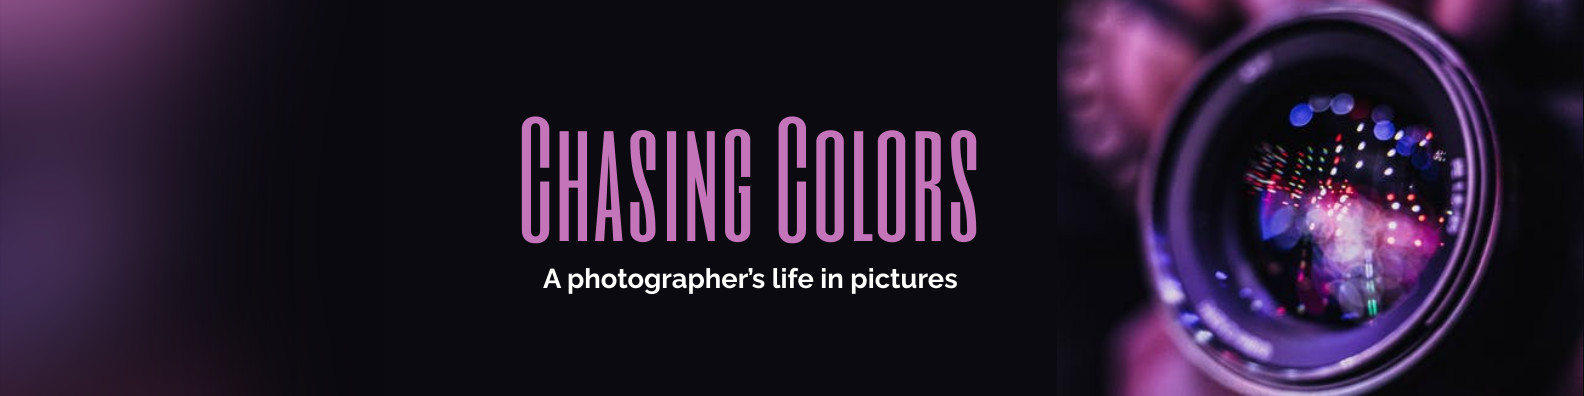 Chasing Colors Photography Linkedin Profile BG